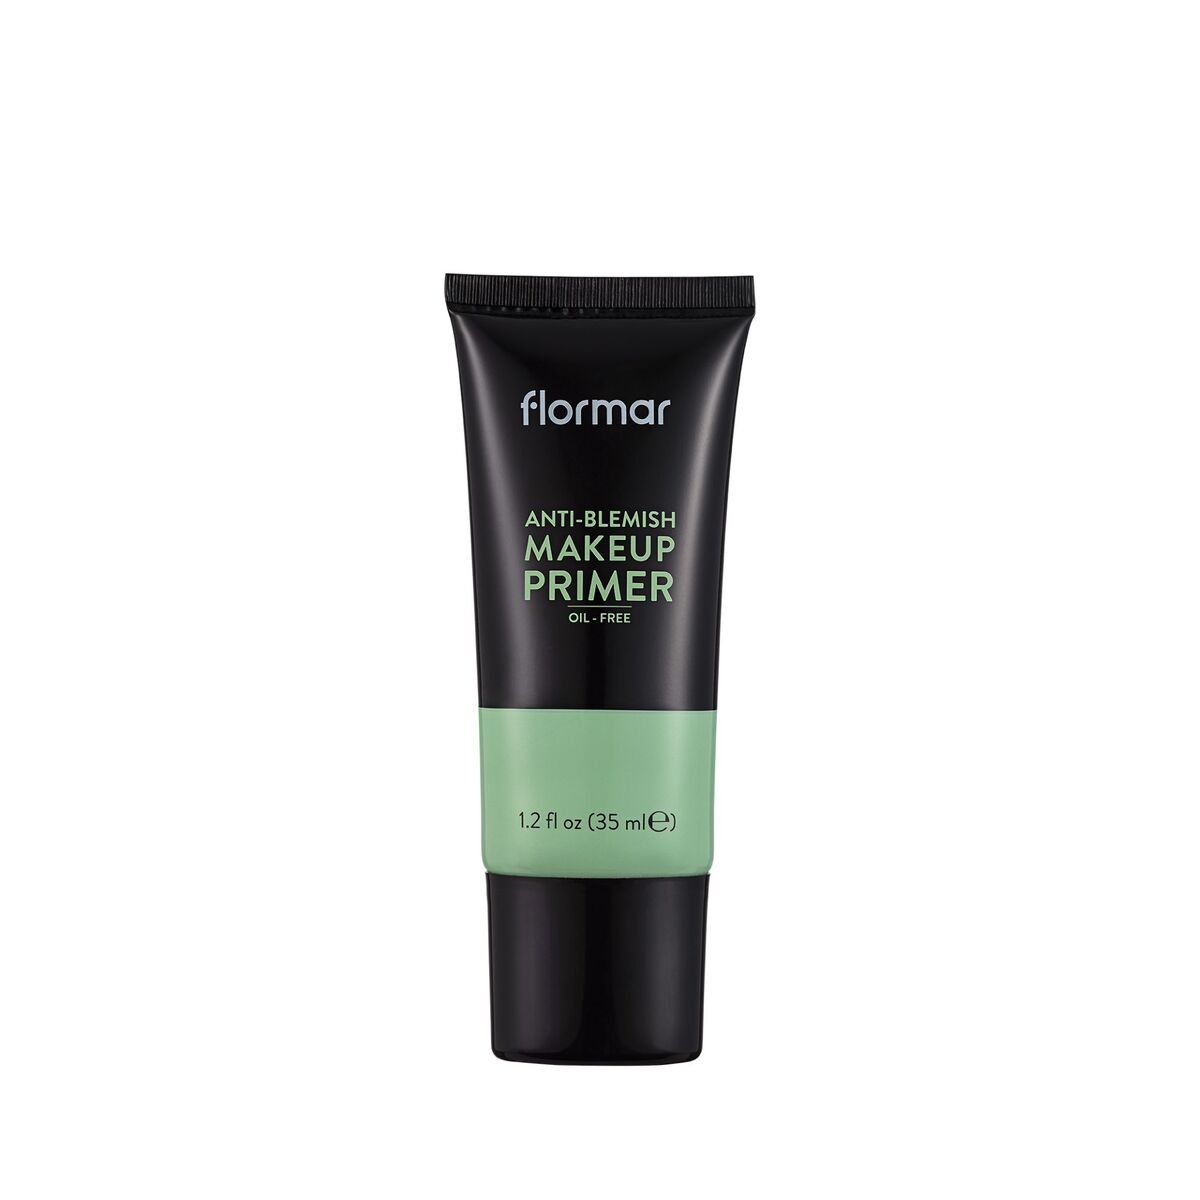 Flormar Anti-Blemish Make Up Primer, FLR00ABMUP